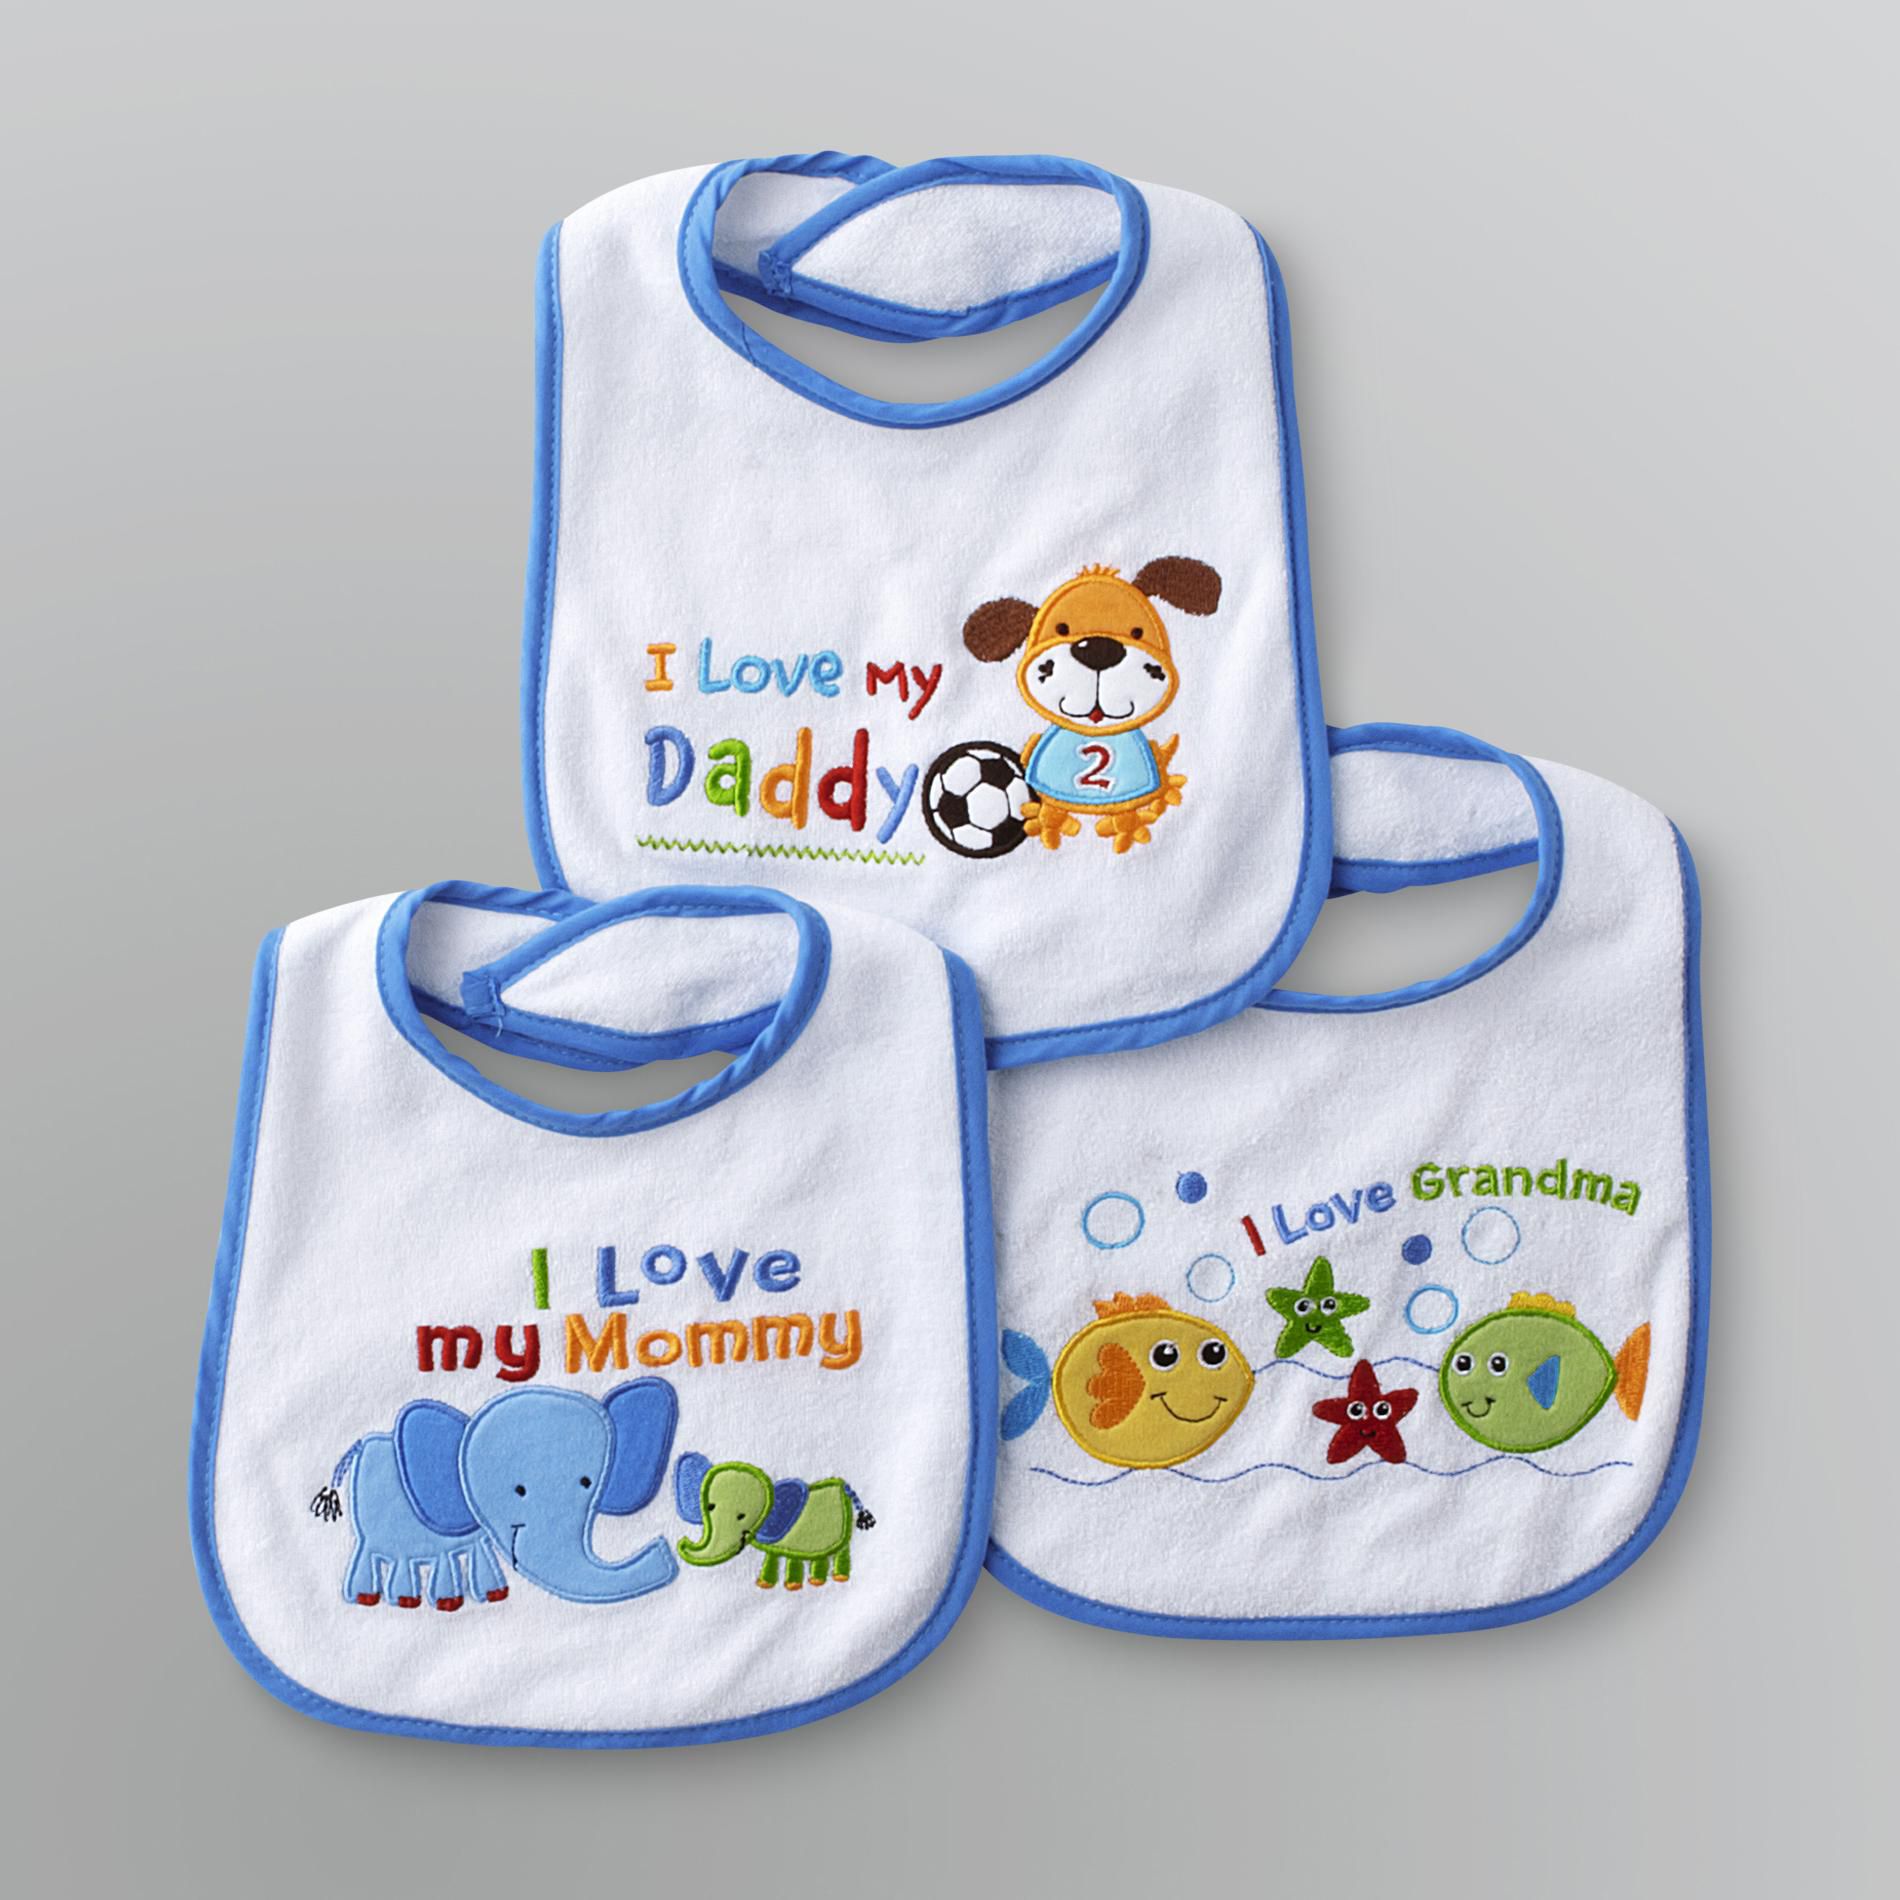 Baby Essentials Infant Boy's Grandma/Mommy/Daddy Bibs - 3 Pack